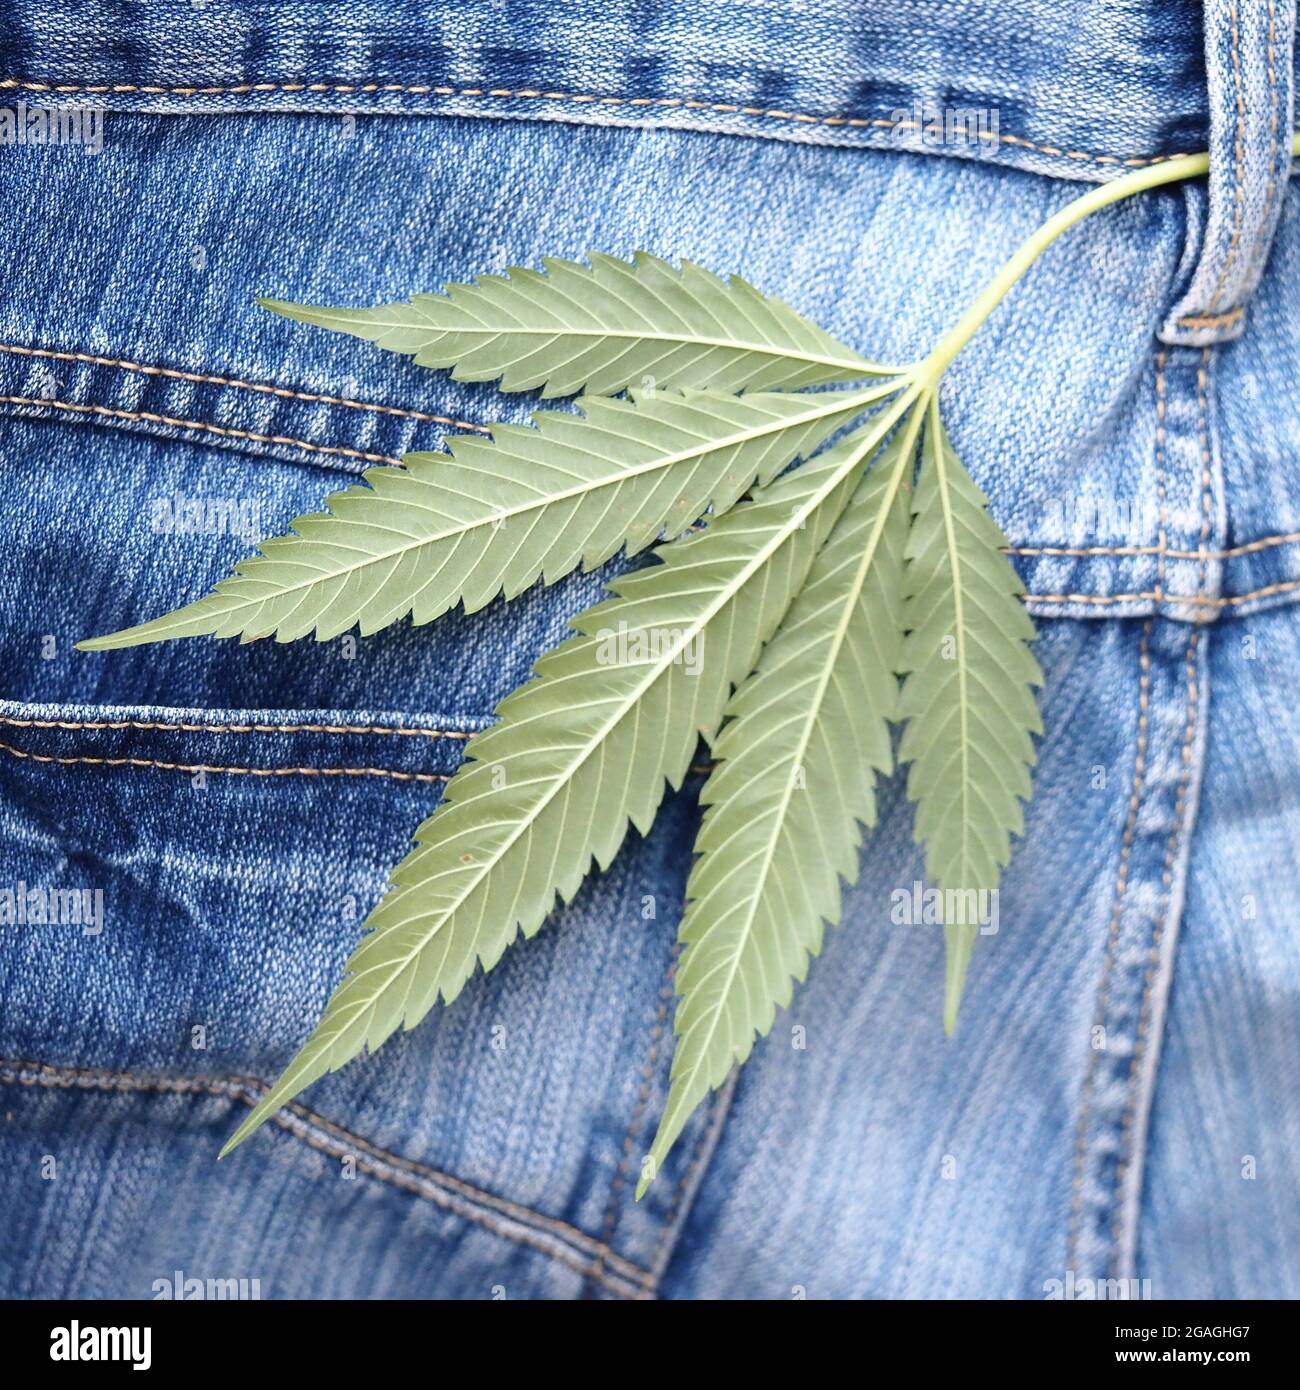 Industrial hemp leaf on jeans fabric Stock Photo - Alamy